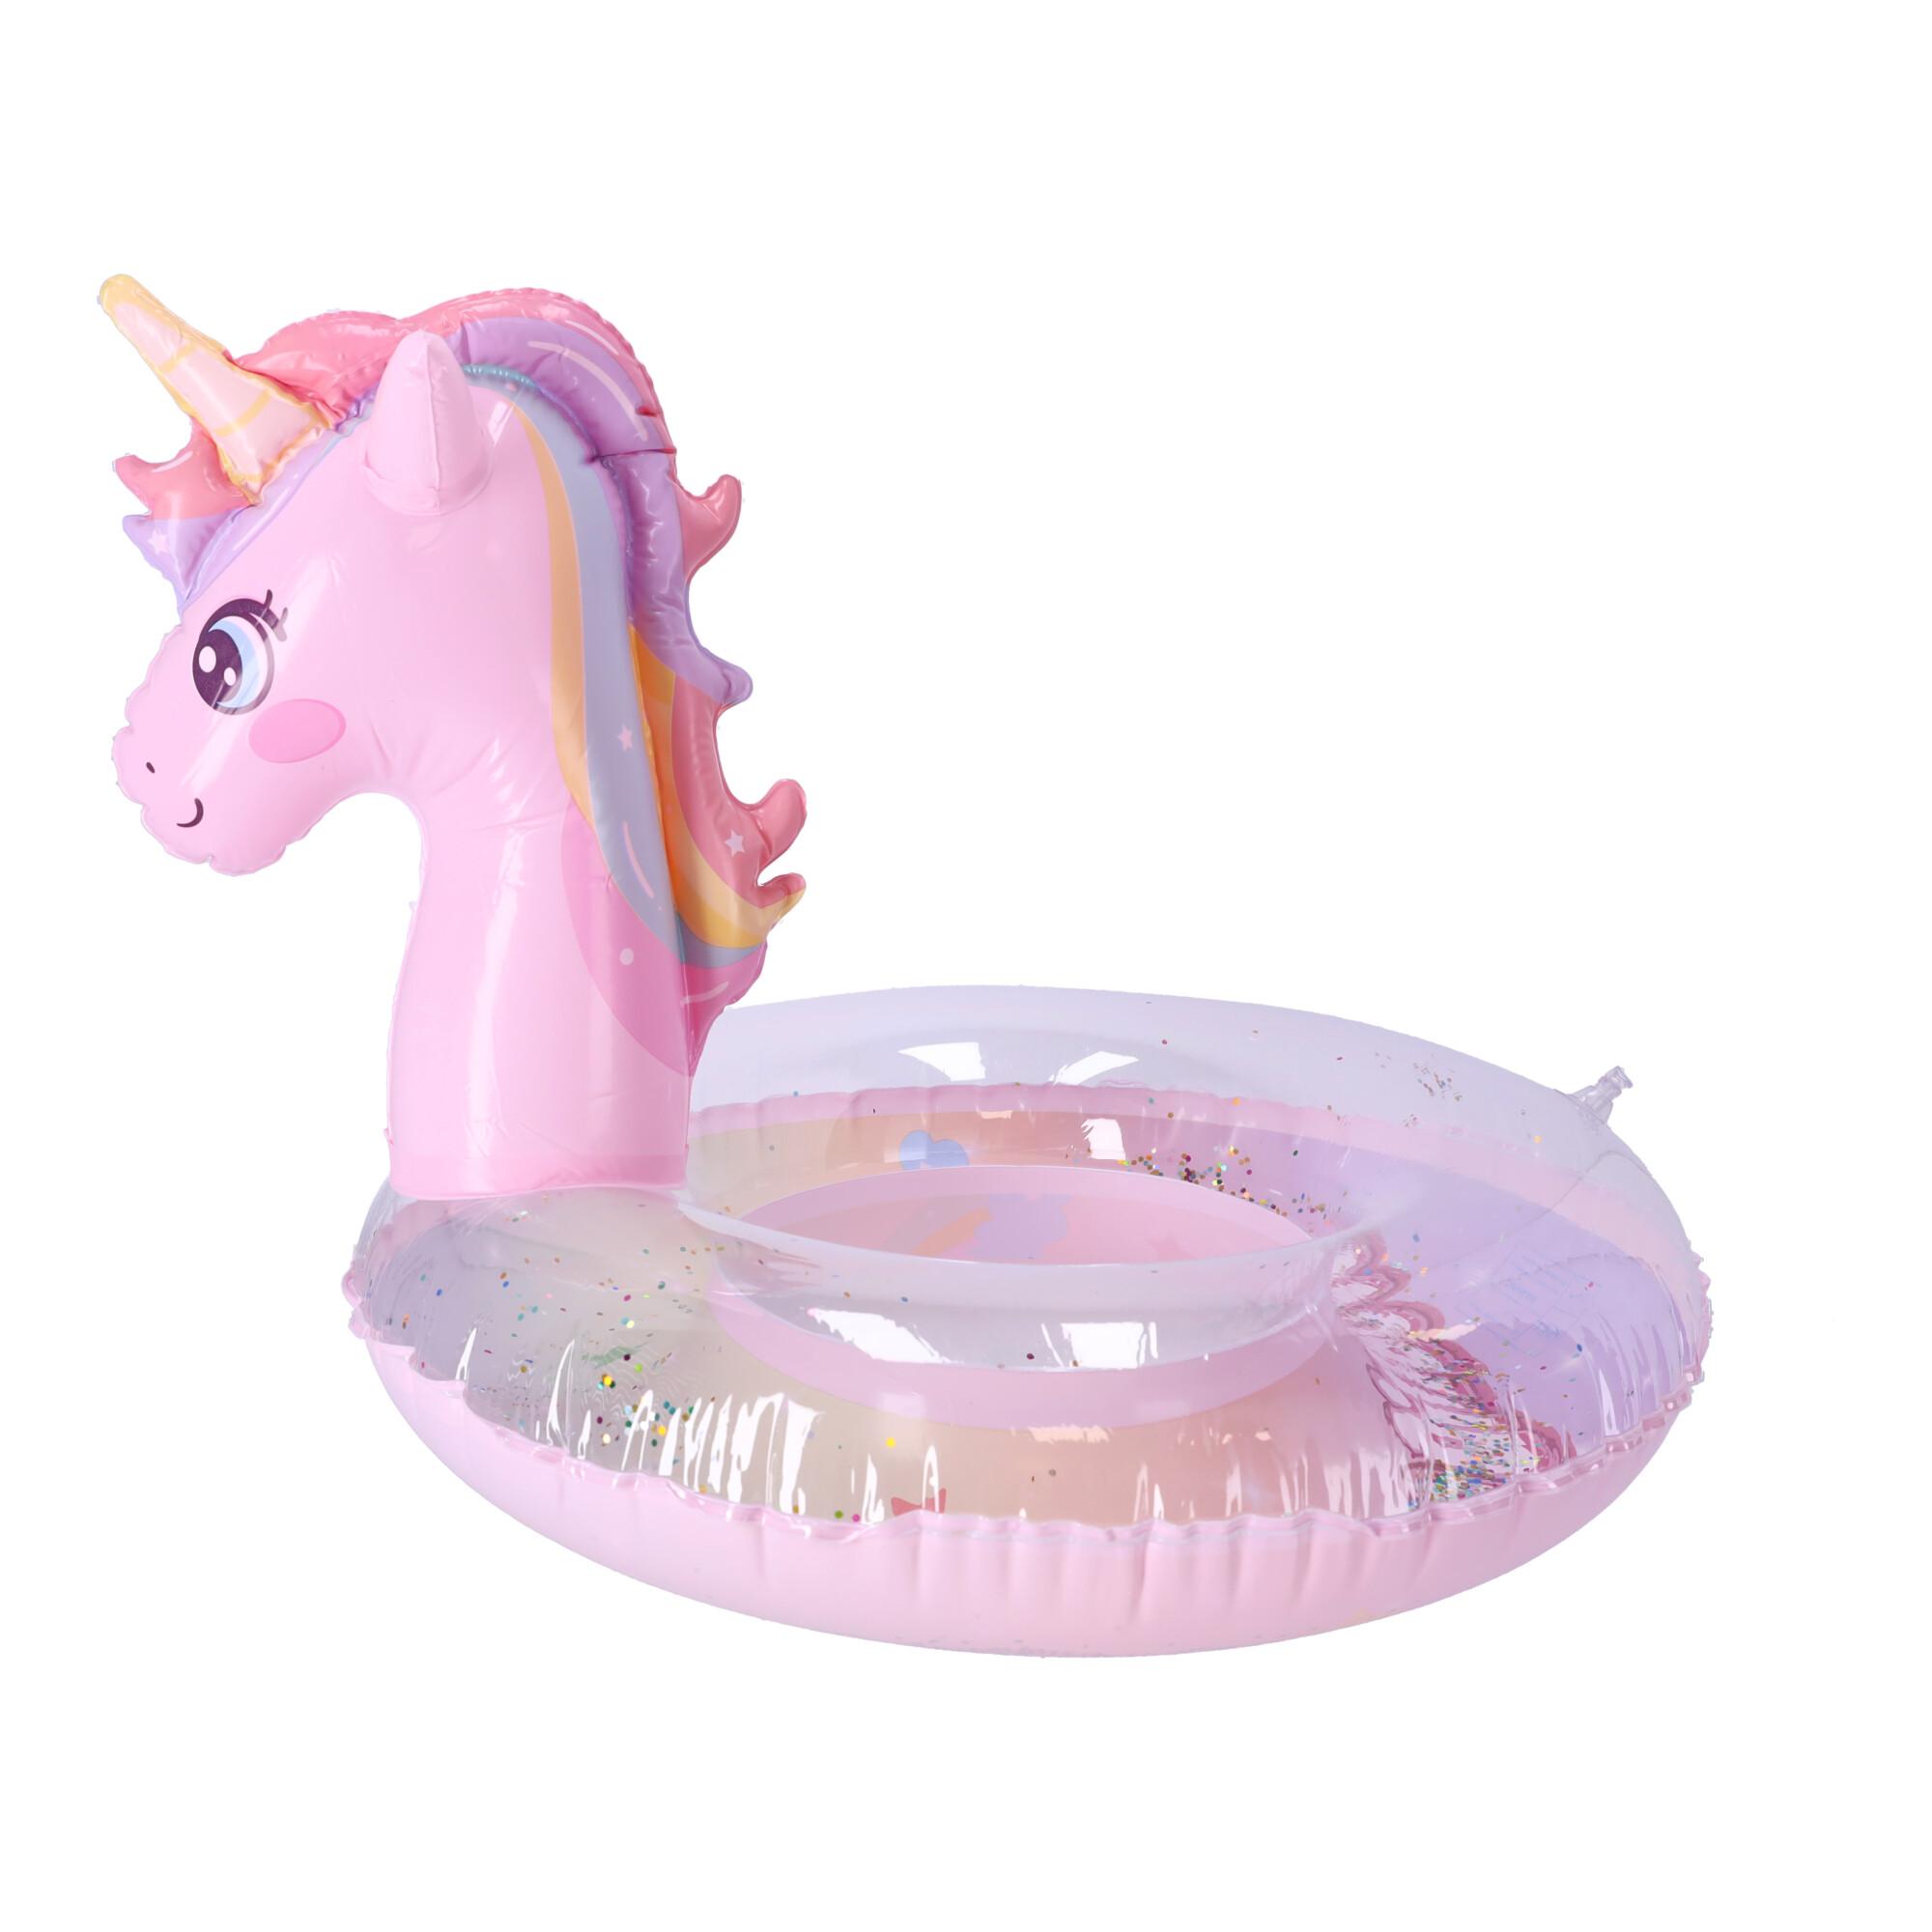 Children's inflatable swimming wheel 90 cm - unicorn, pink